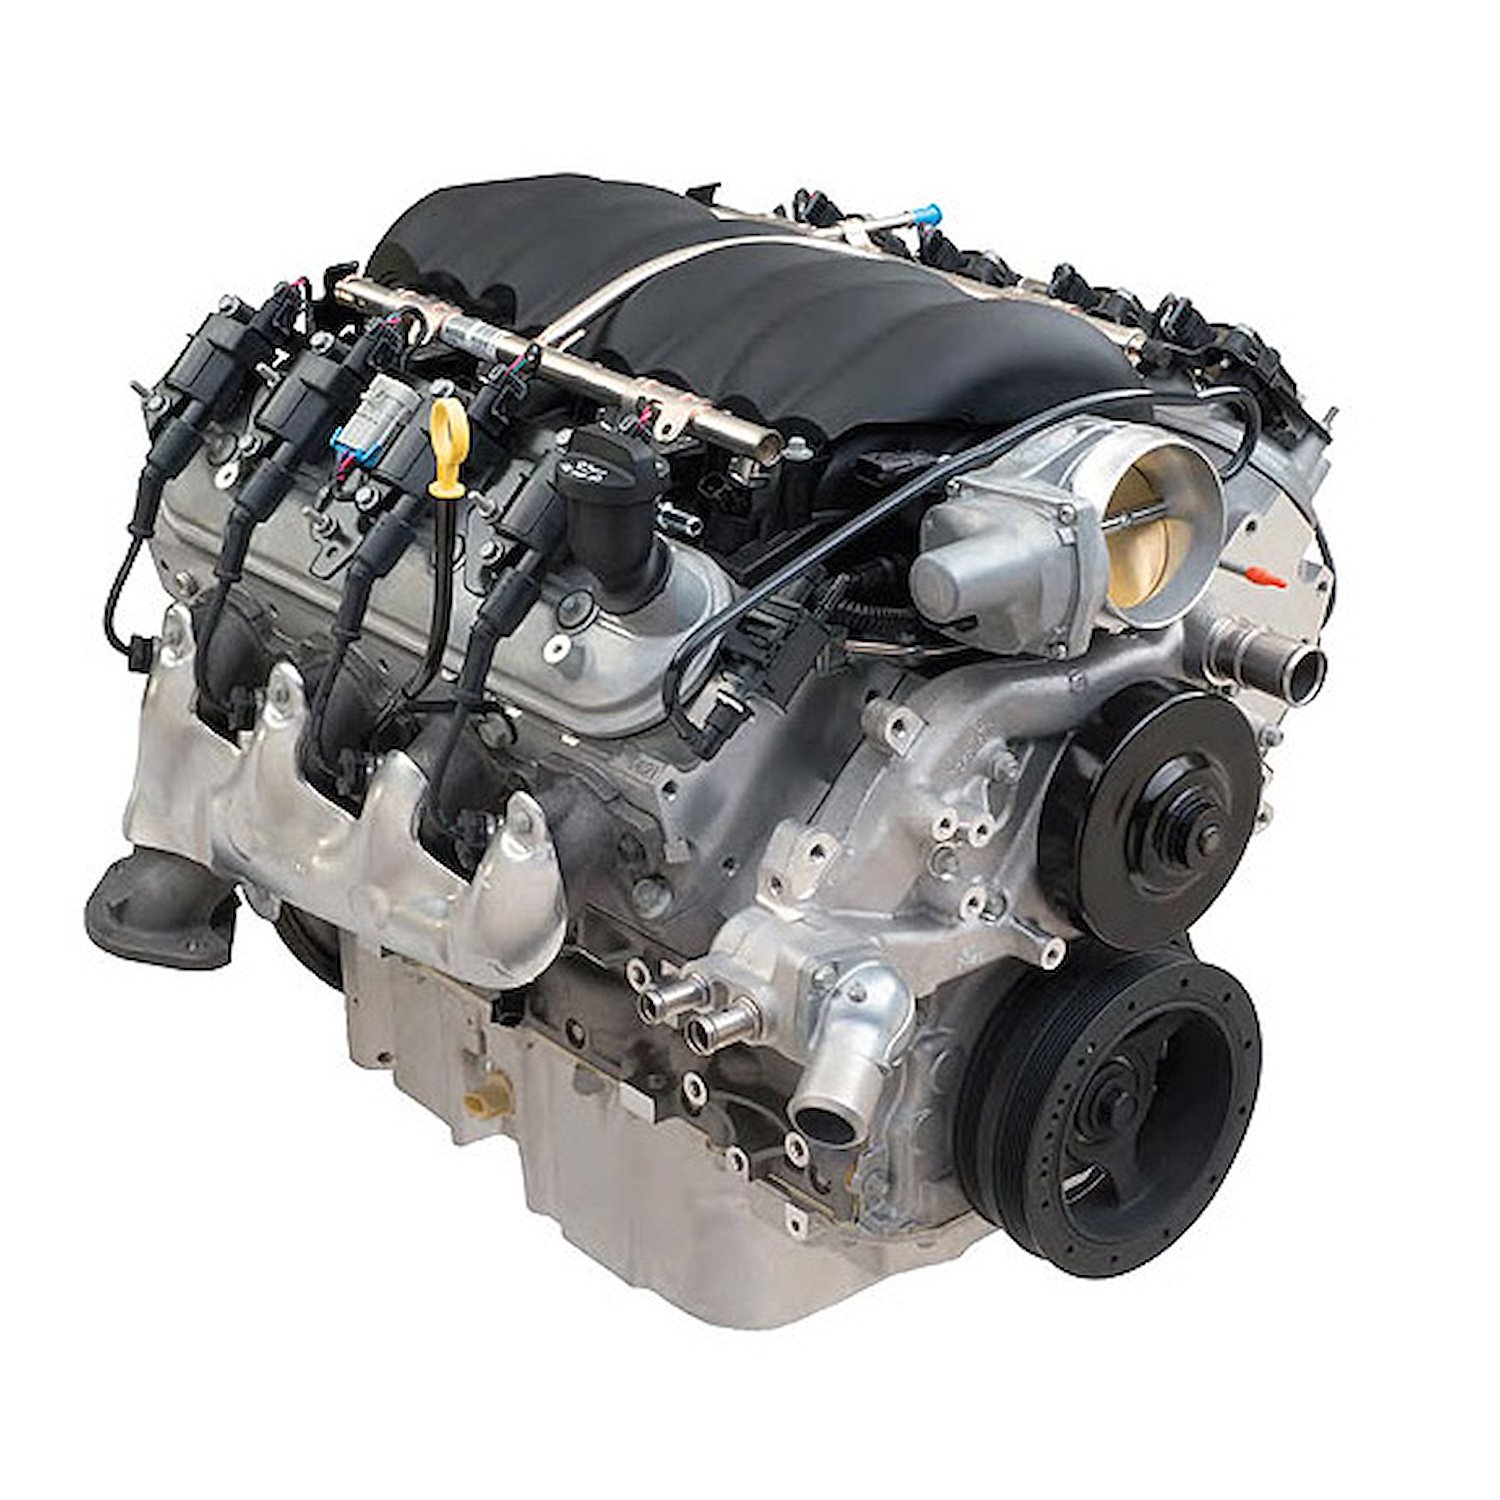 LS376/525 6.2L LS3 Engine w/ Aluminum Heads 525